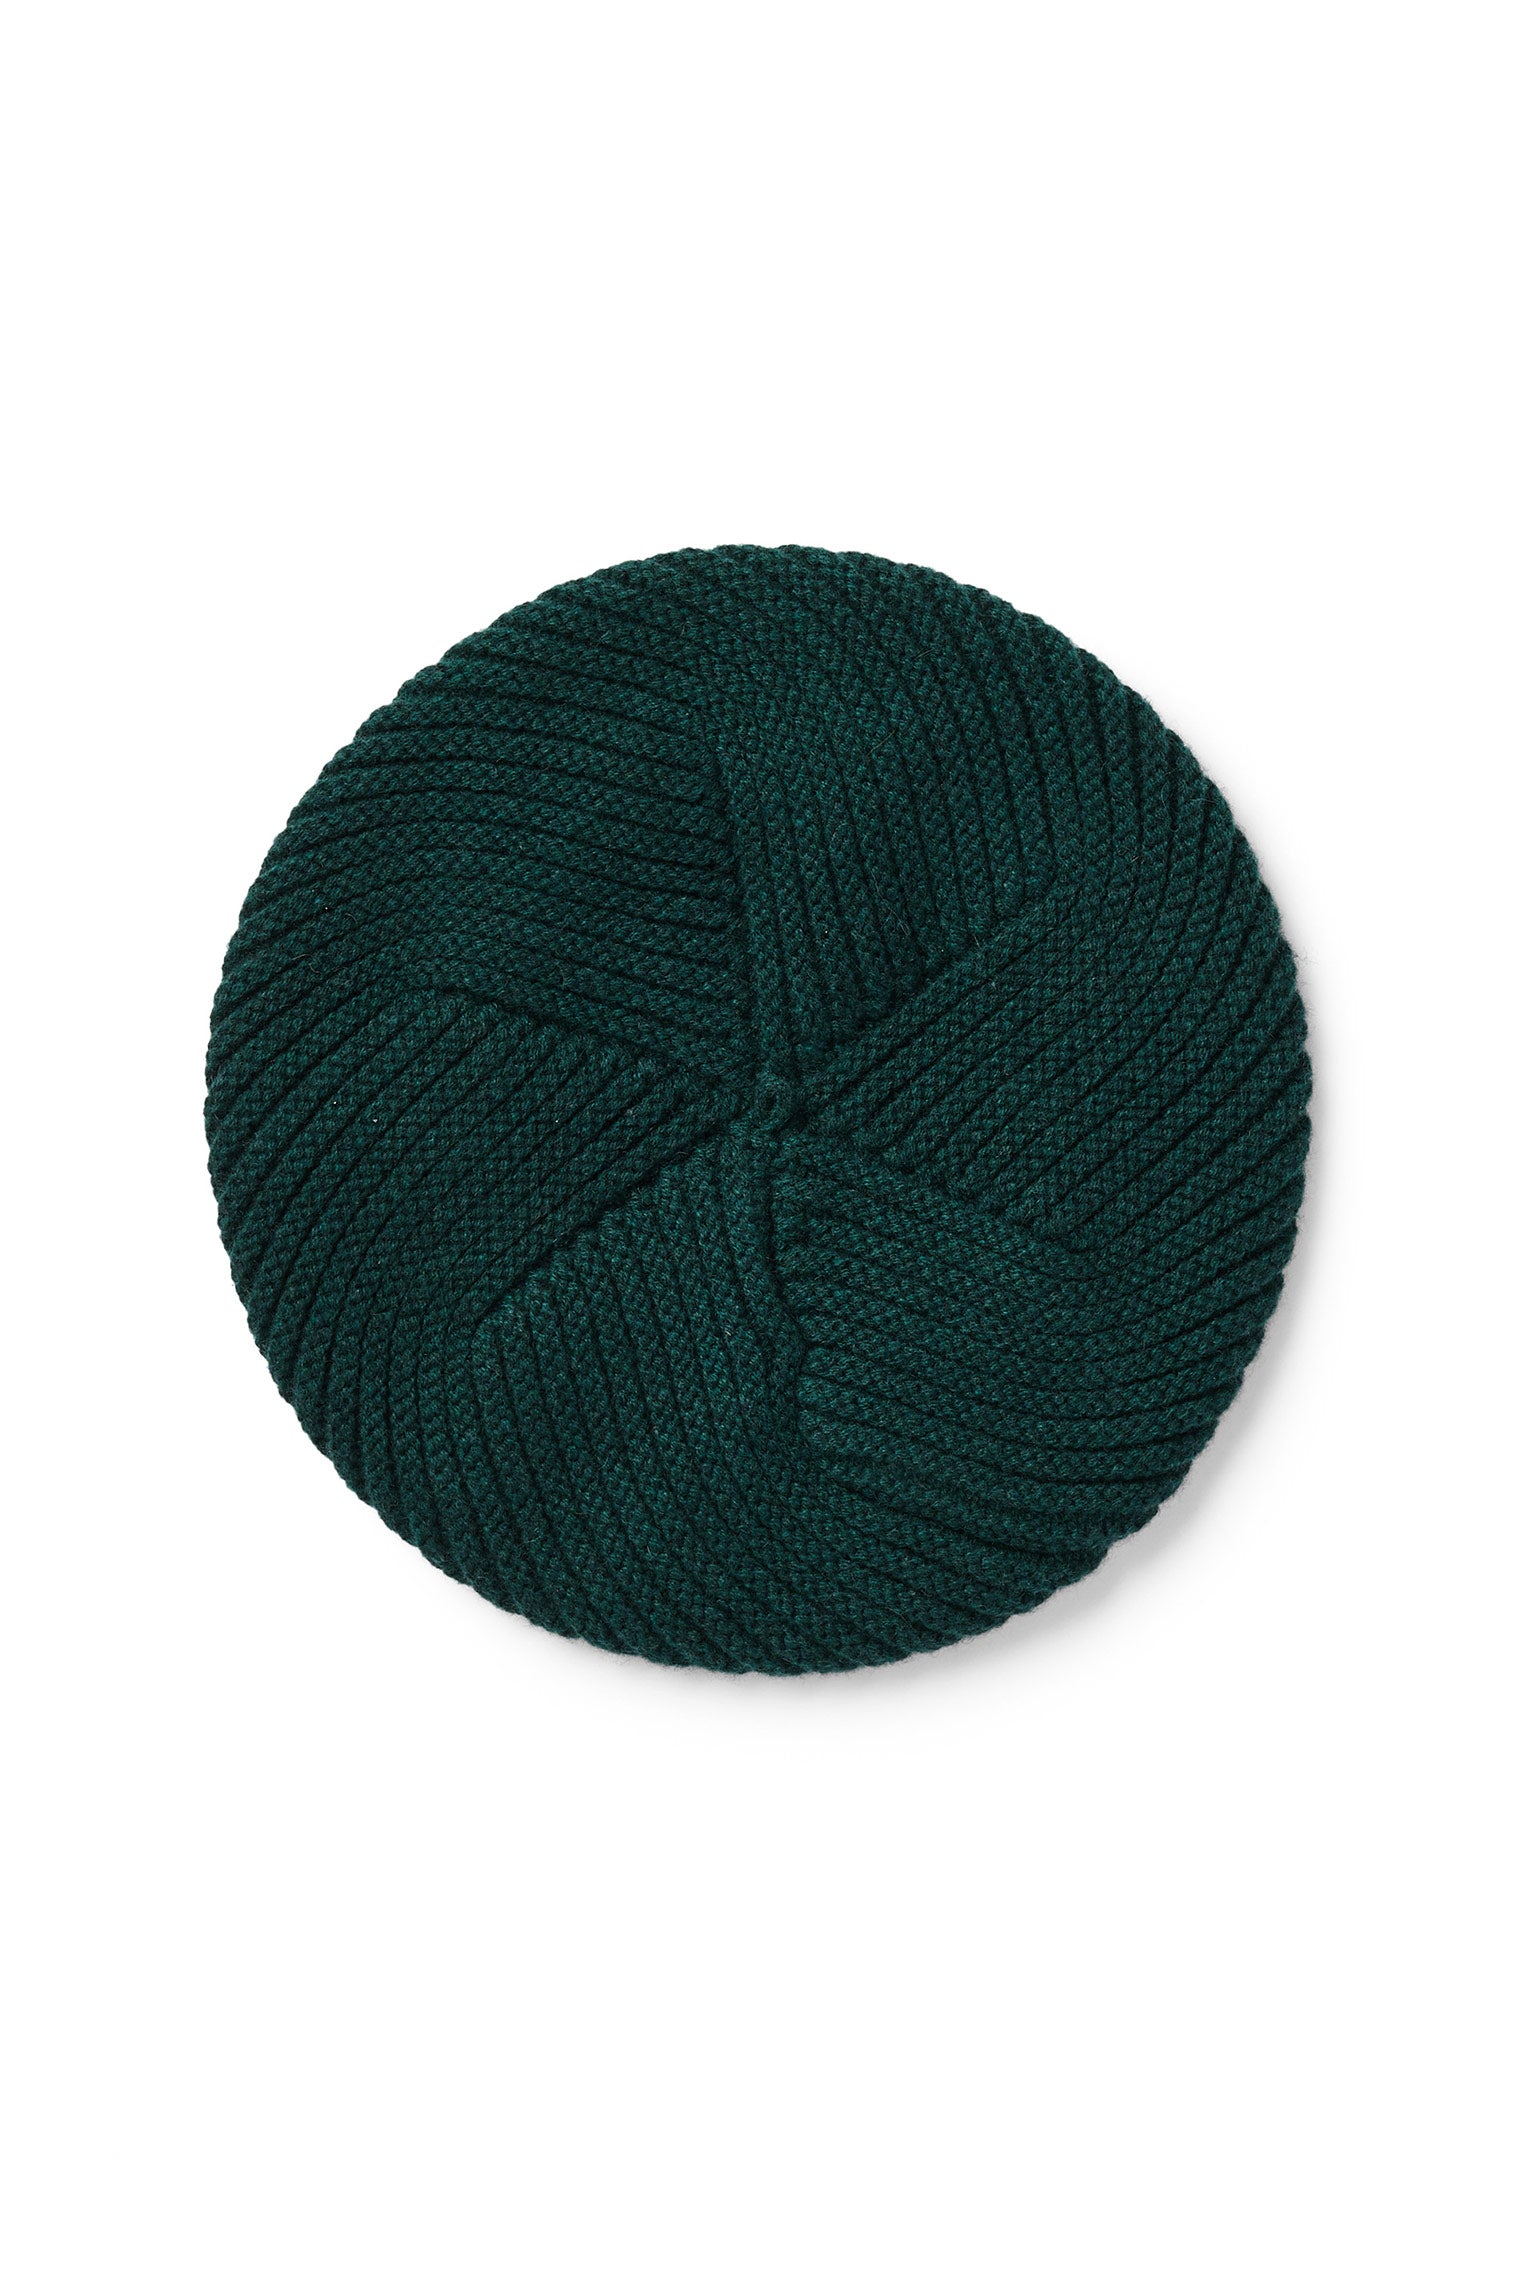 Green Knitted Cashmere Beret - Women’s Hats - Lock & Co. Hatters London UK